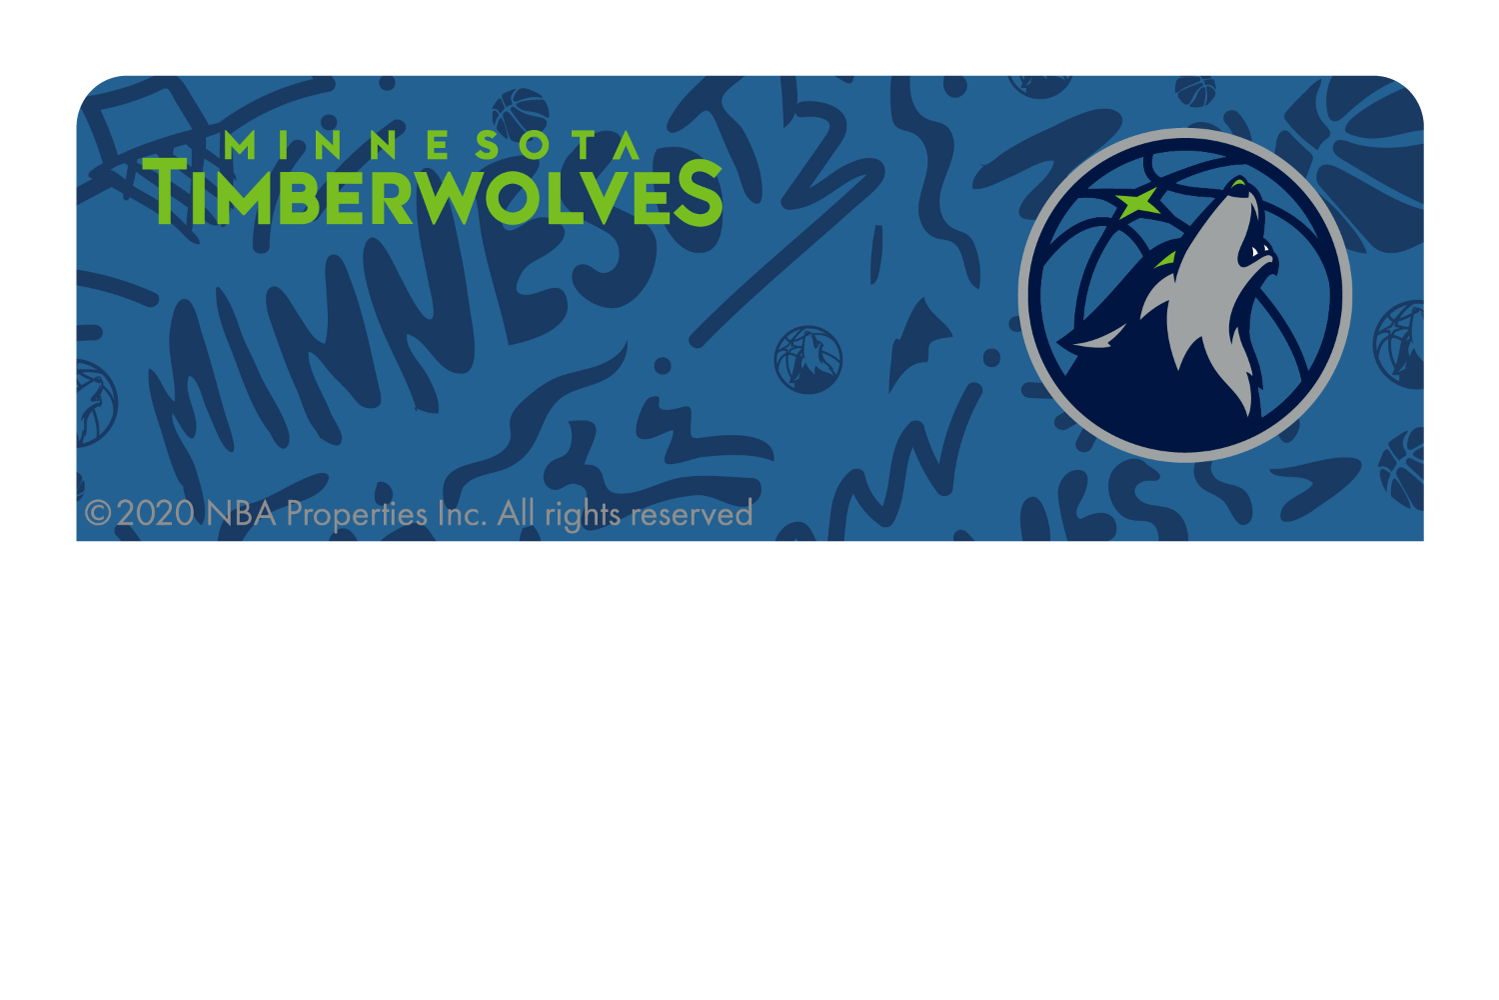 Minnesota Timberwolves: Team Mural